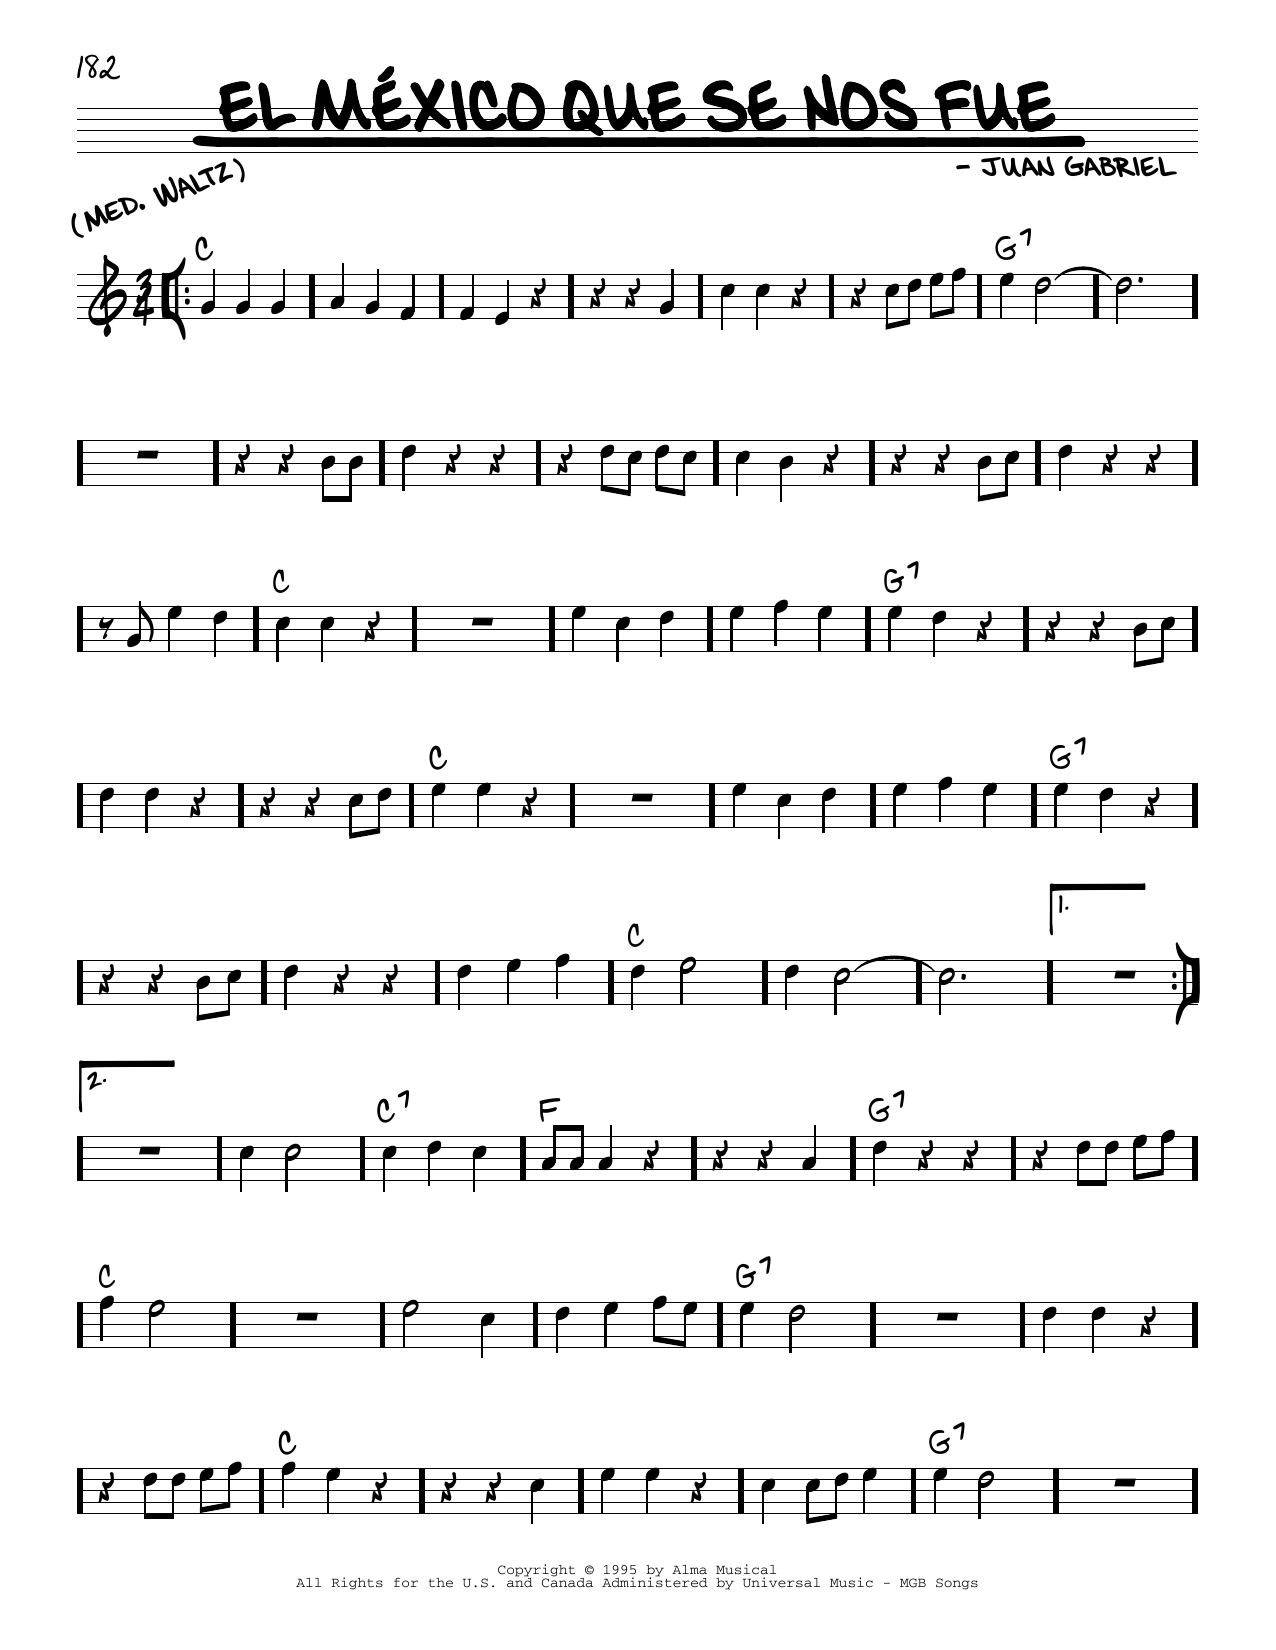 Juan Gabriel El Mexico Que Se Nos Fue Sheet Music Notes & Chords for Real Book – Melody & Chords - Download or Print PDF